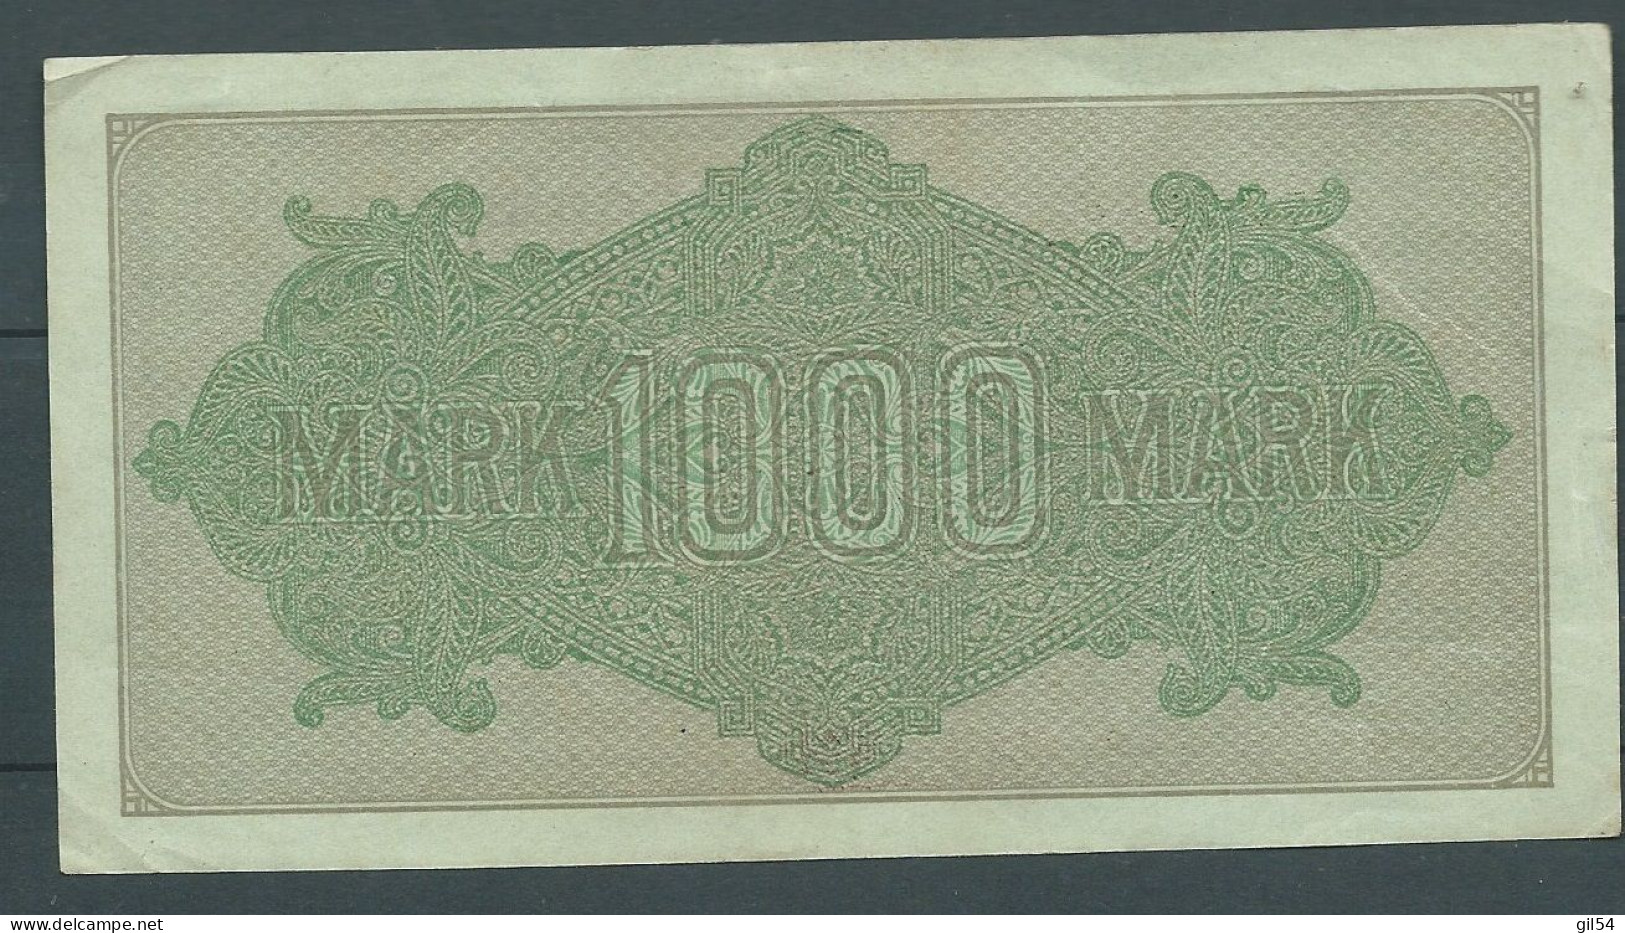 Reichsbanknote 1000 MARK 1922 6 Sa 471374  -  Laura 7929 - 1.000 Mark